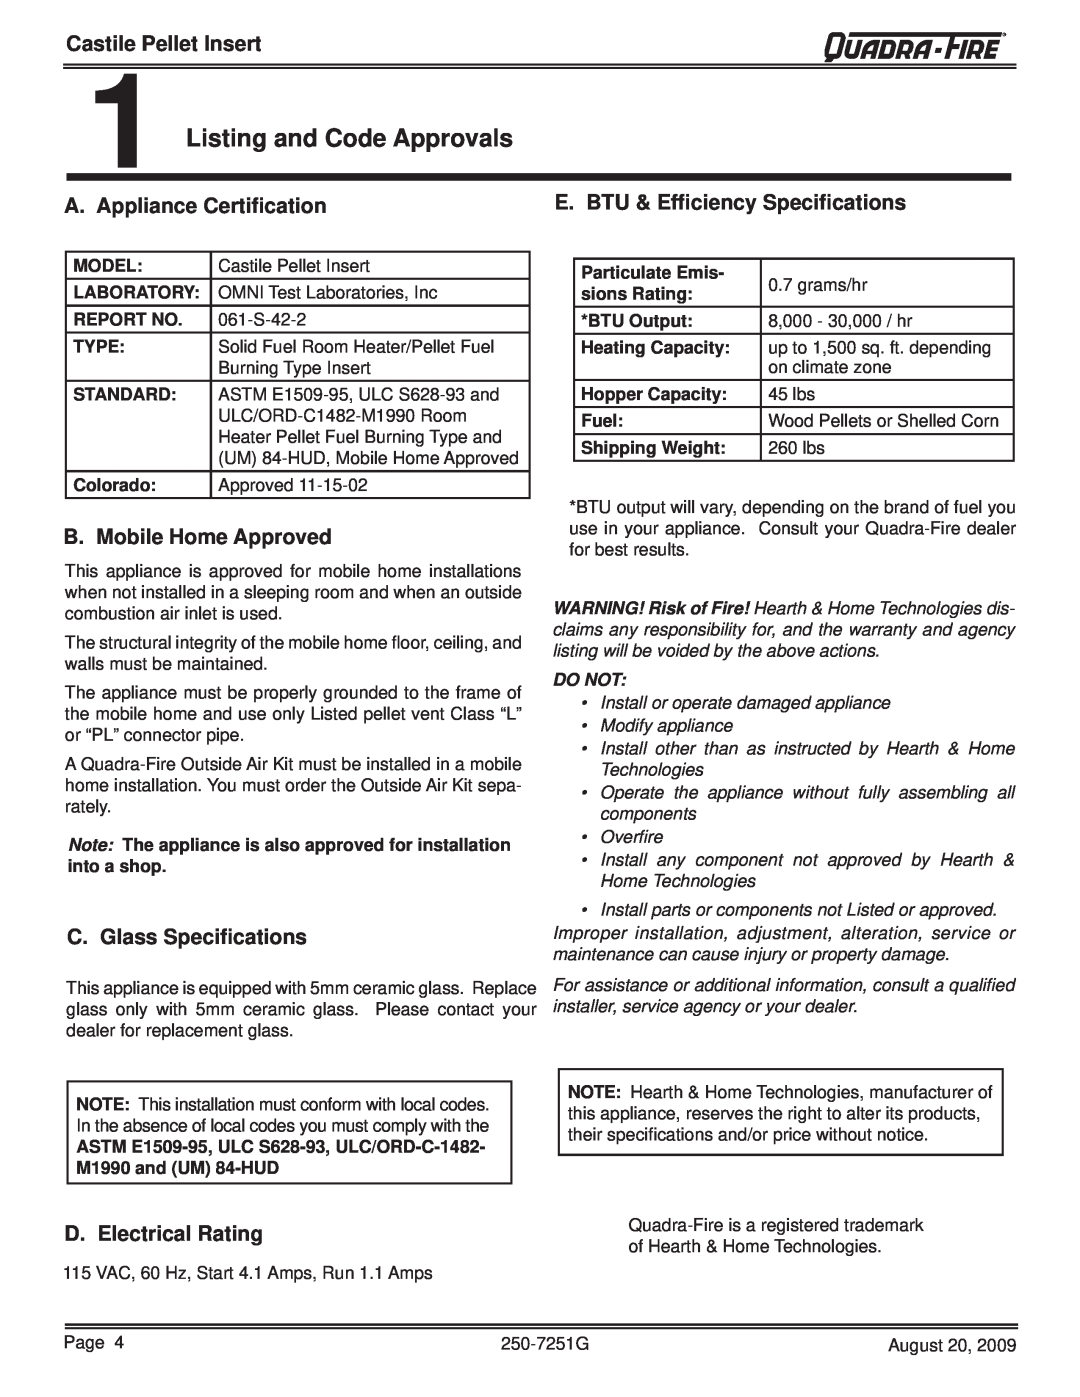 Quadra-Fire 810-03201 Listing and Code Approvals, A. Appliance Certiﬁcation, E. BTU & Efﬁciency Speciﬁ cations, Model 